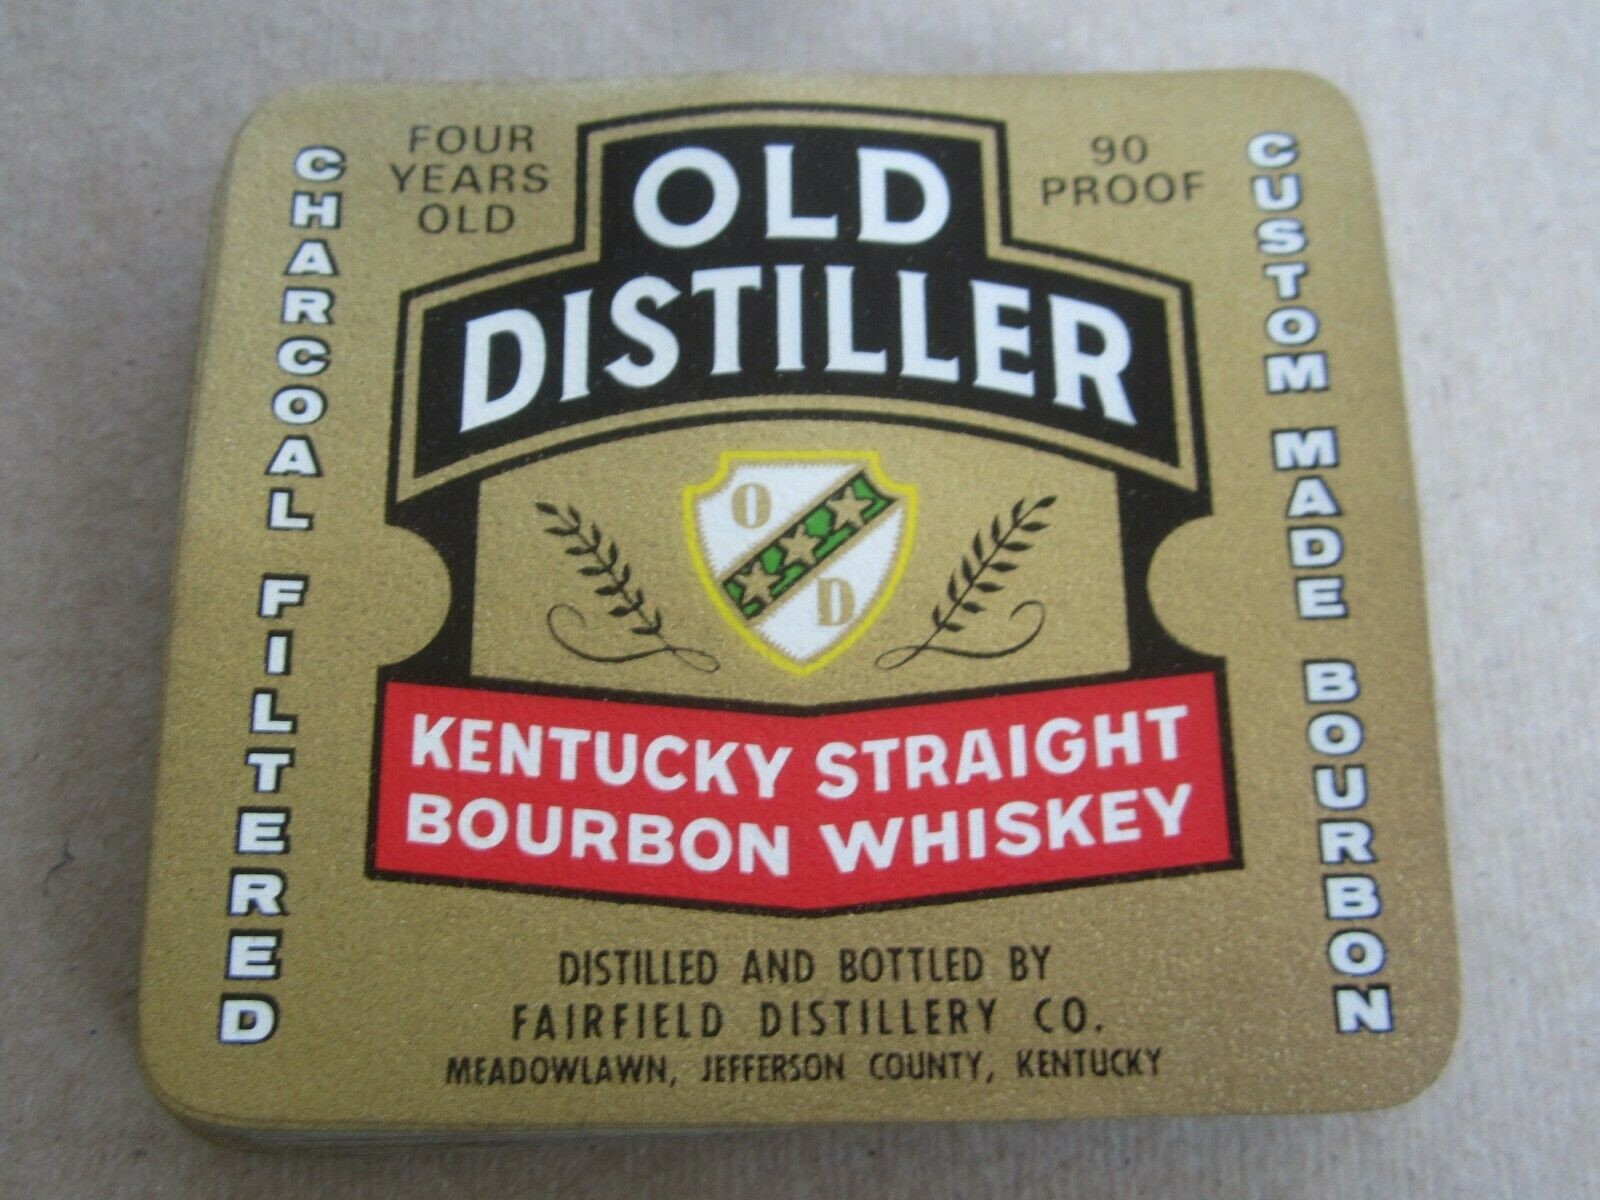  Lot of 100 - OLD DISTILLER - Bourbon WHISKEY L...